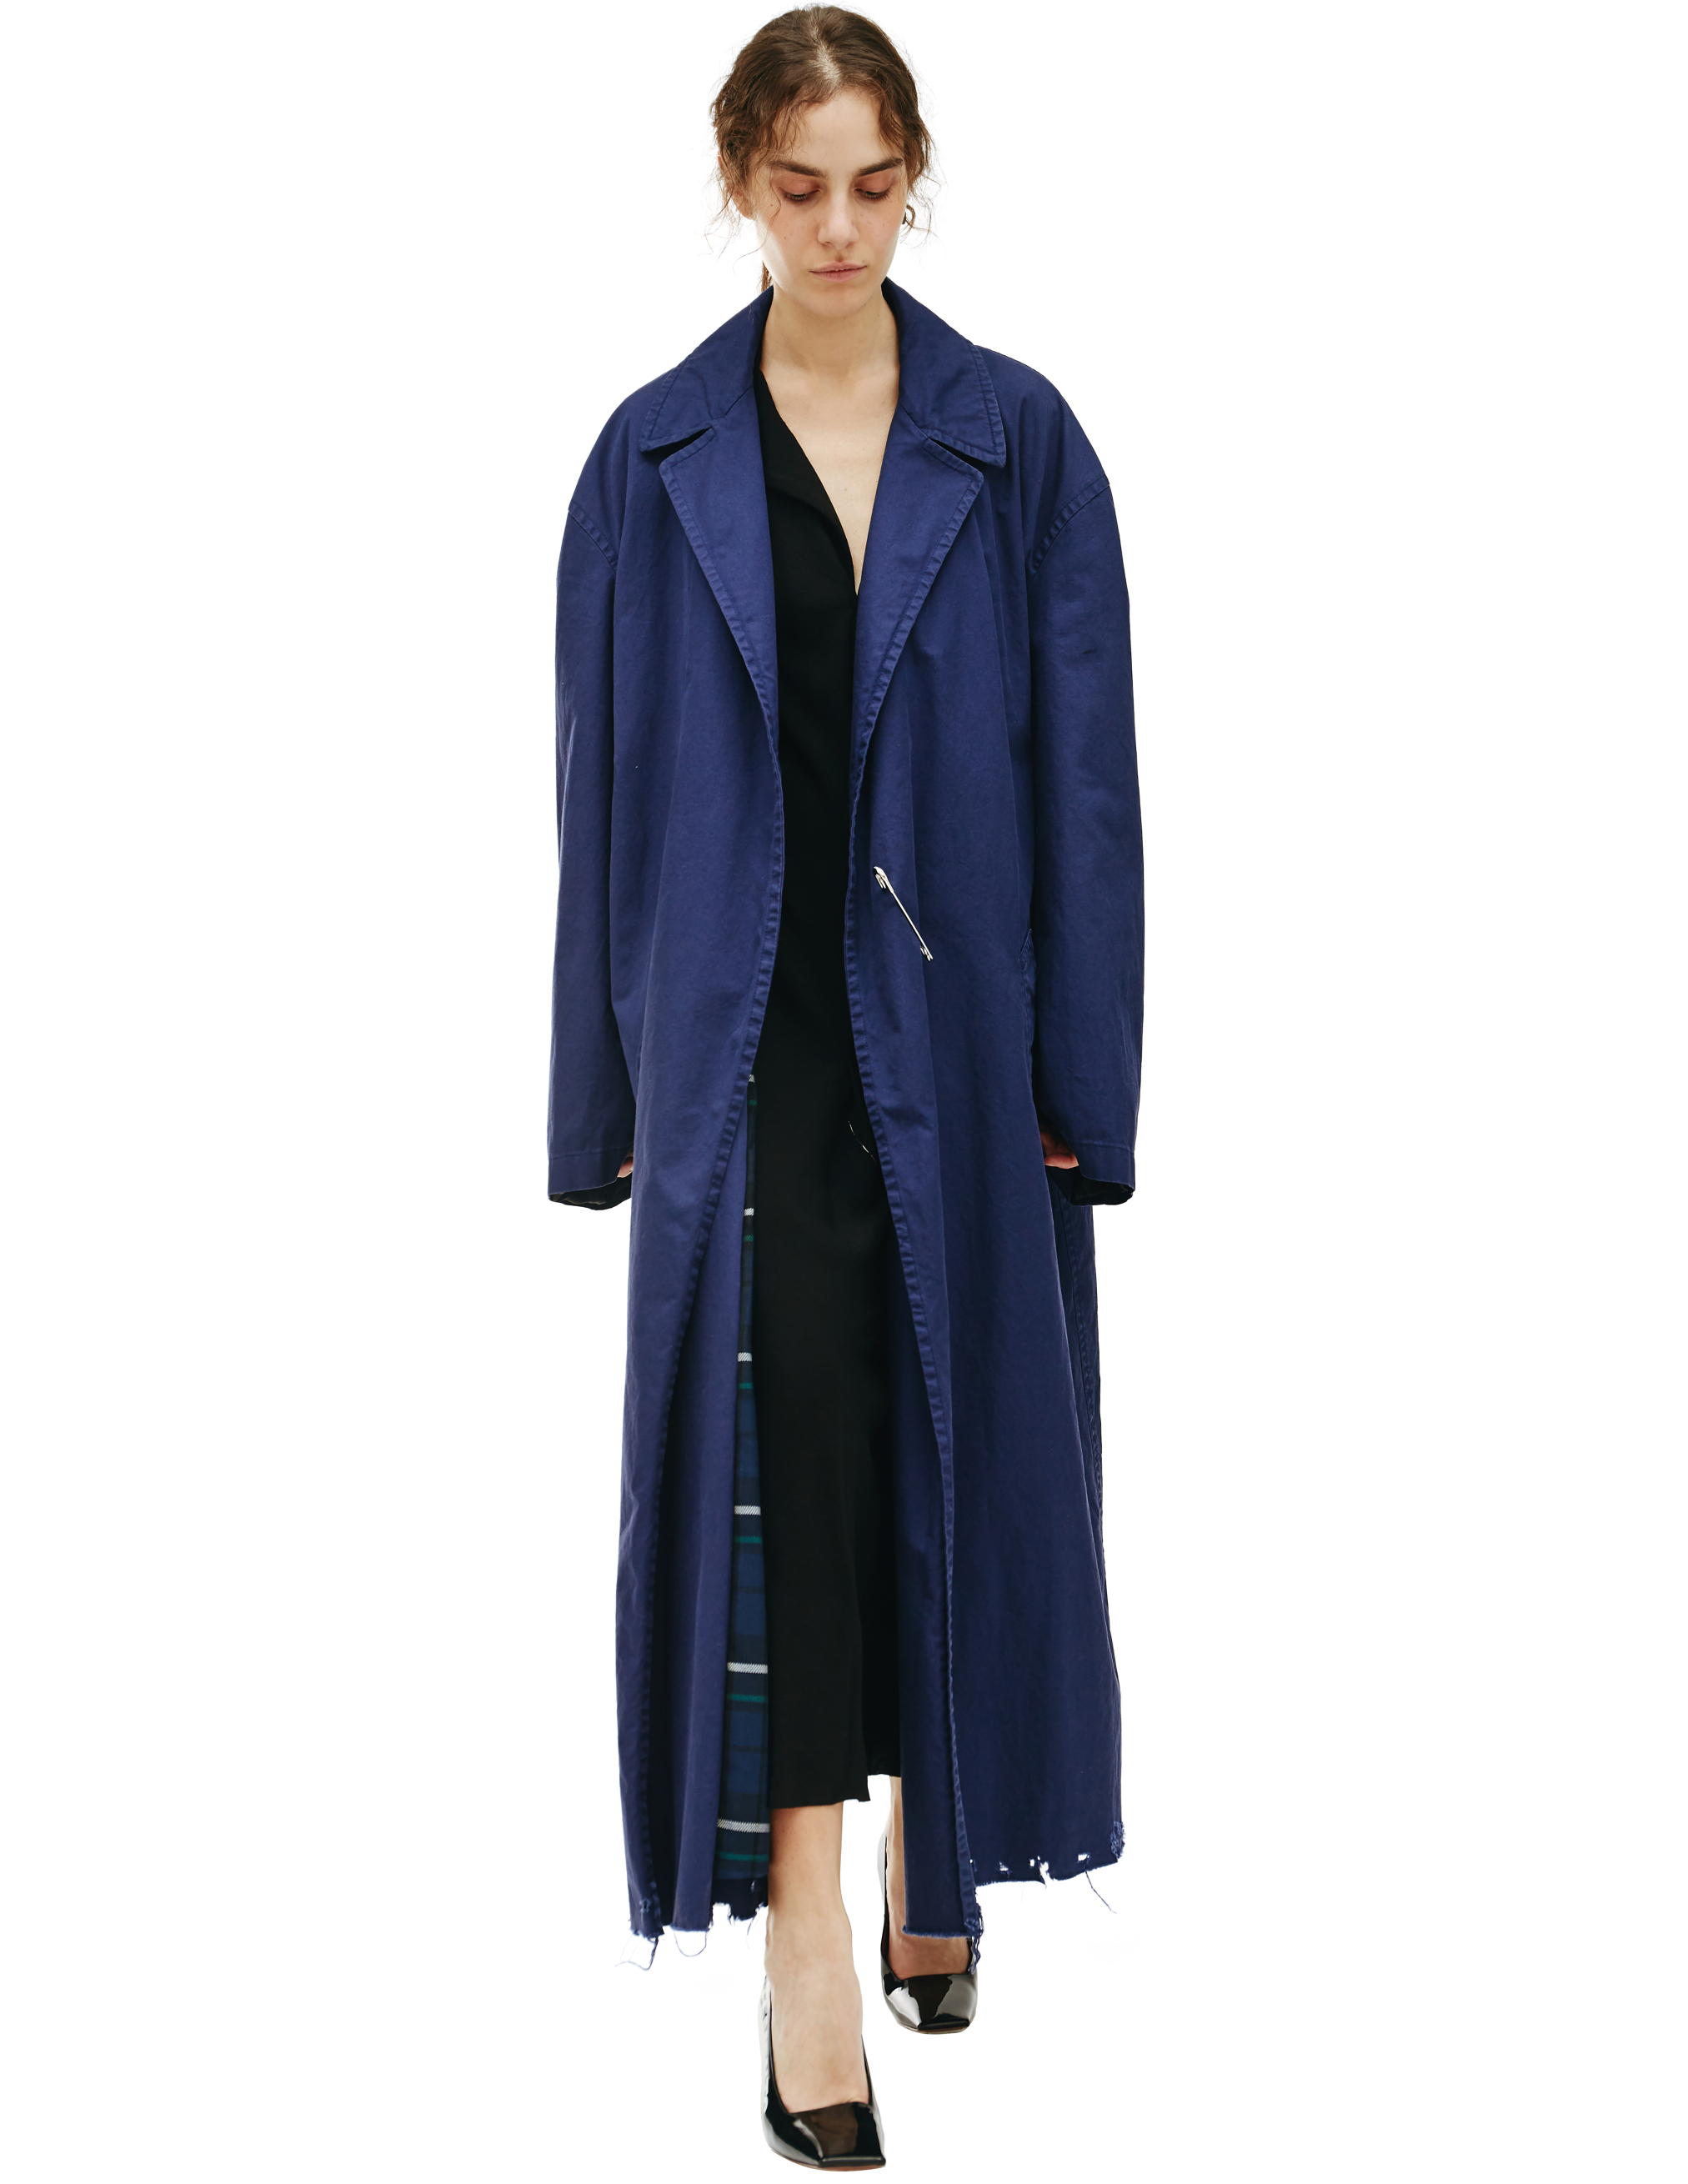 Оверсайз пальто с клетчатым подкладом Balenciaga 681165/TKP06/4140, размер 3 681165/TKP06/4140 - фото 1